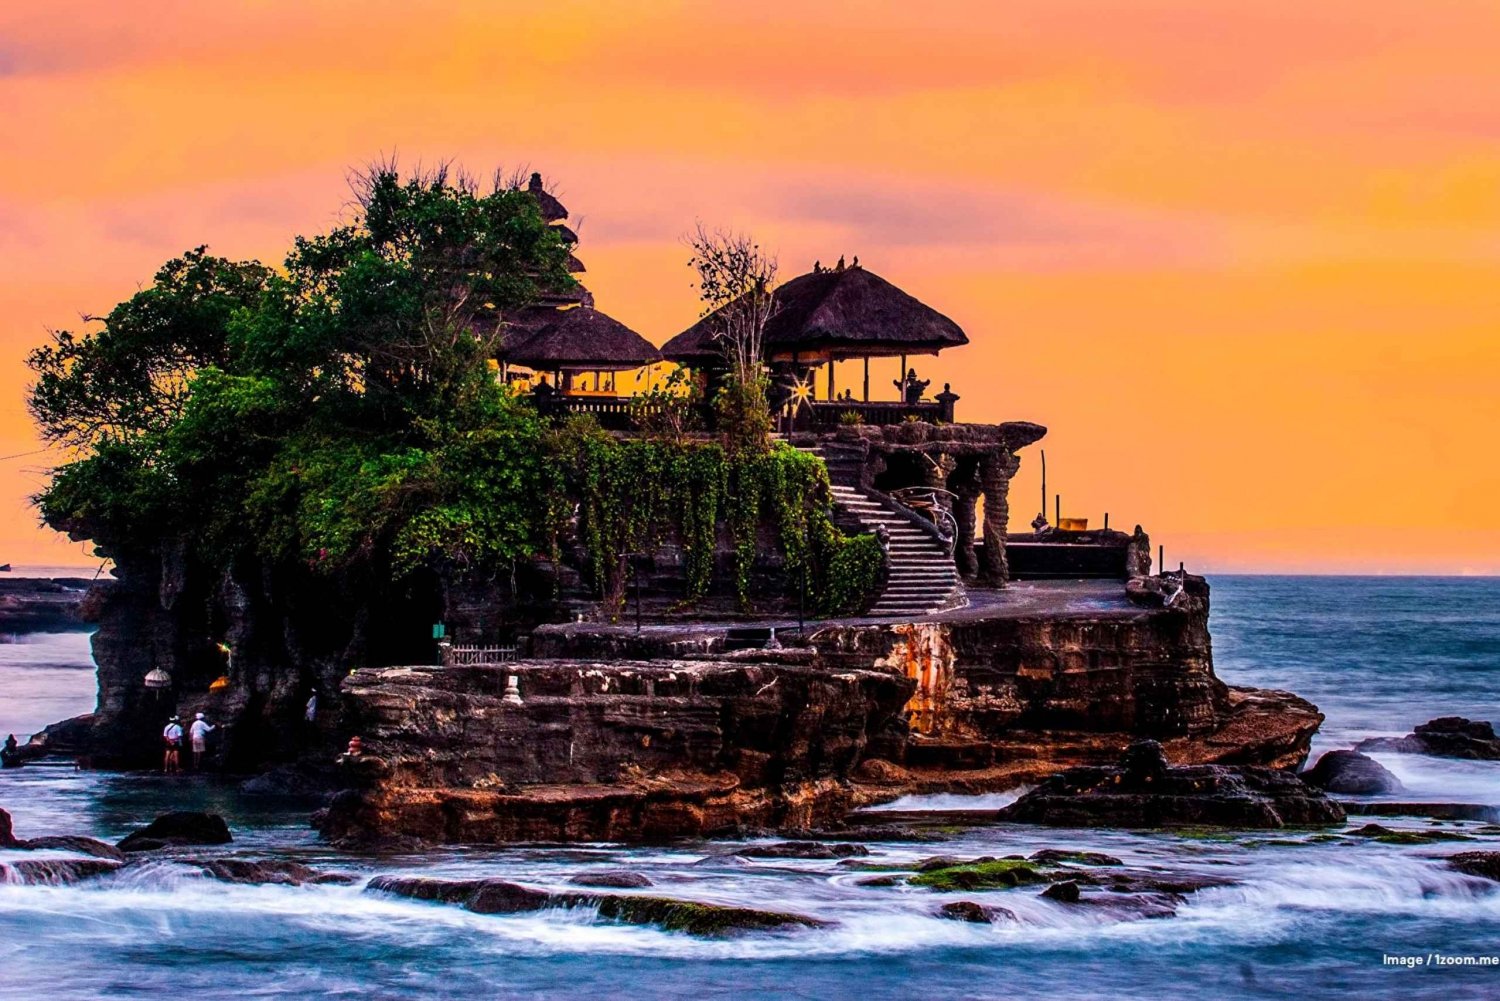 Bali: Ubuds fossefall, risterrasse og solnedgangsturer i Tanah Lot